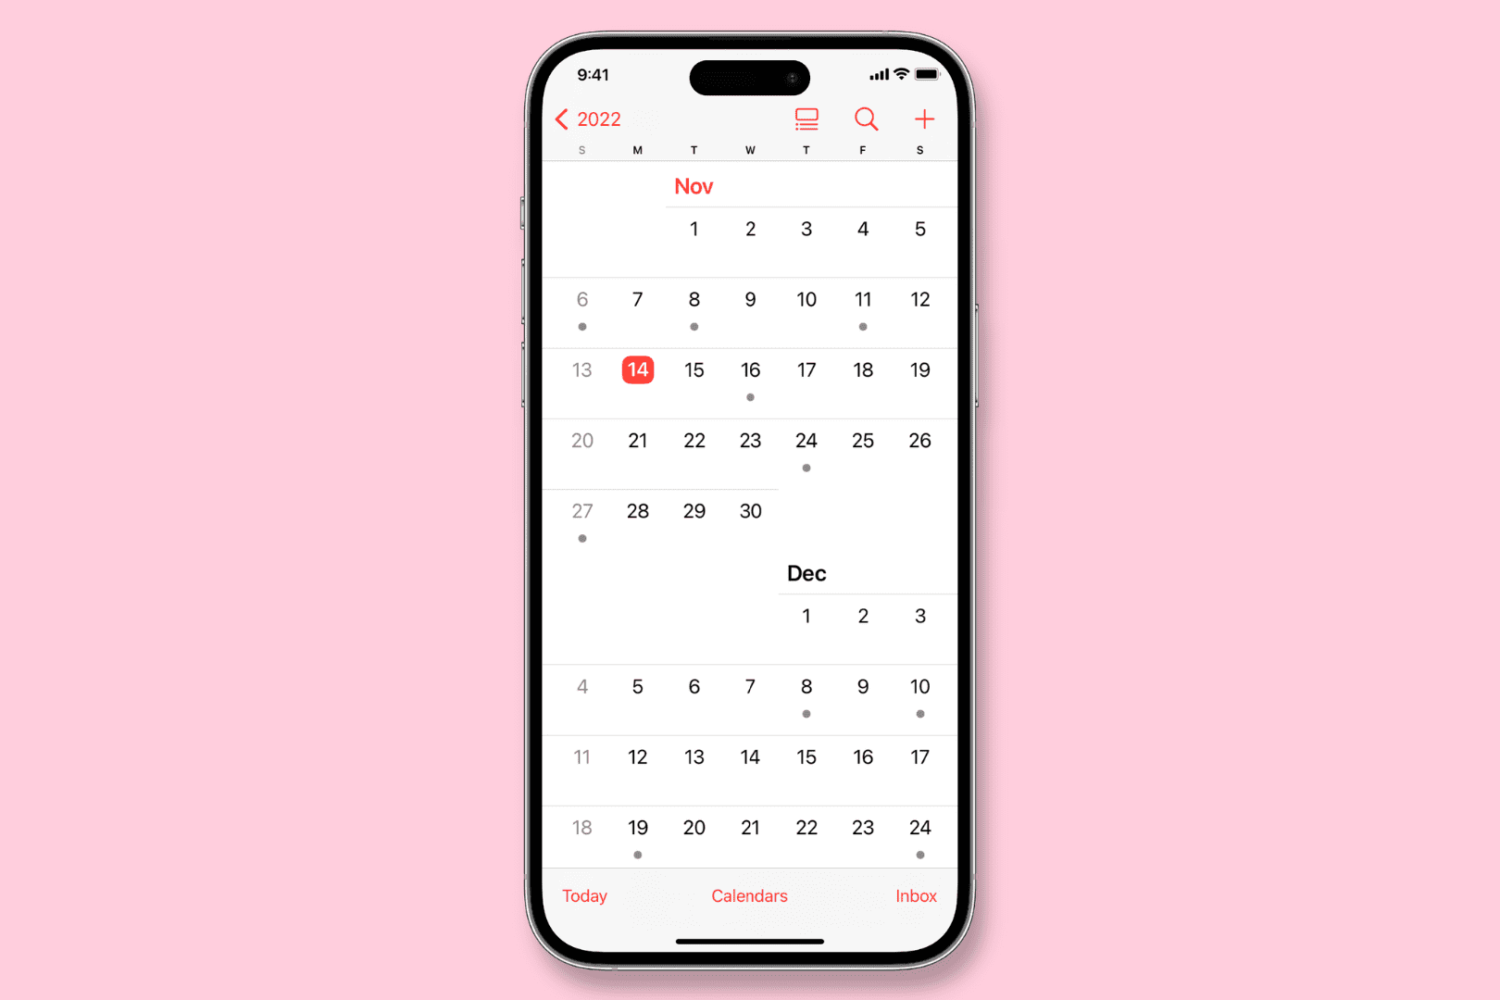 Calendar app on iPhone